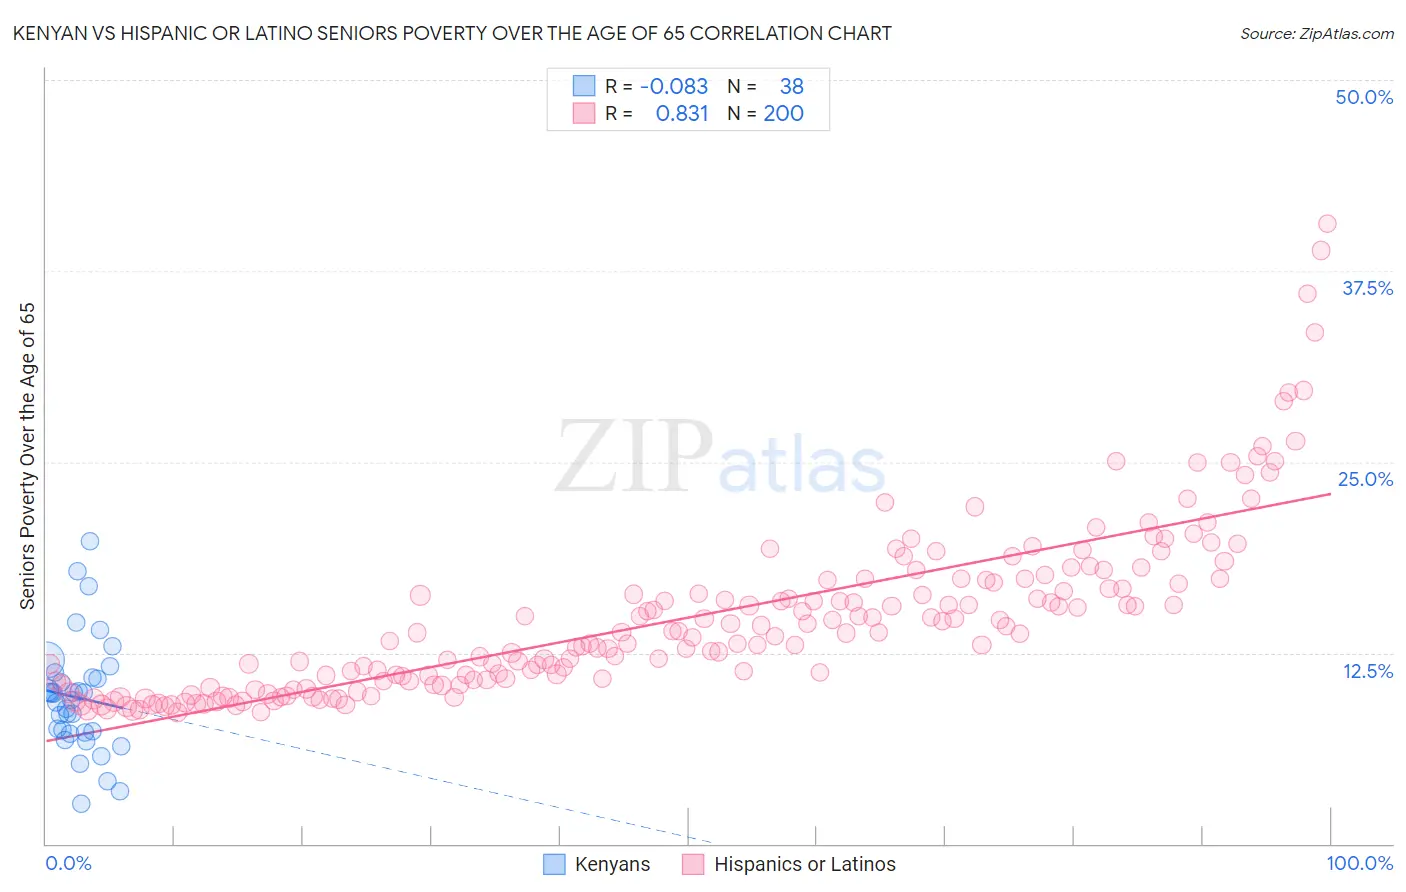 Kenyan vs Hispanic or Latino Seniors Poverty Over the Age of 65